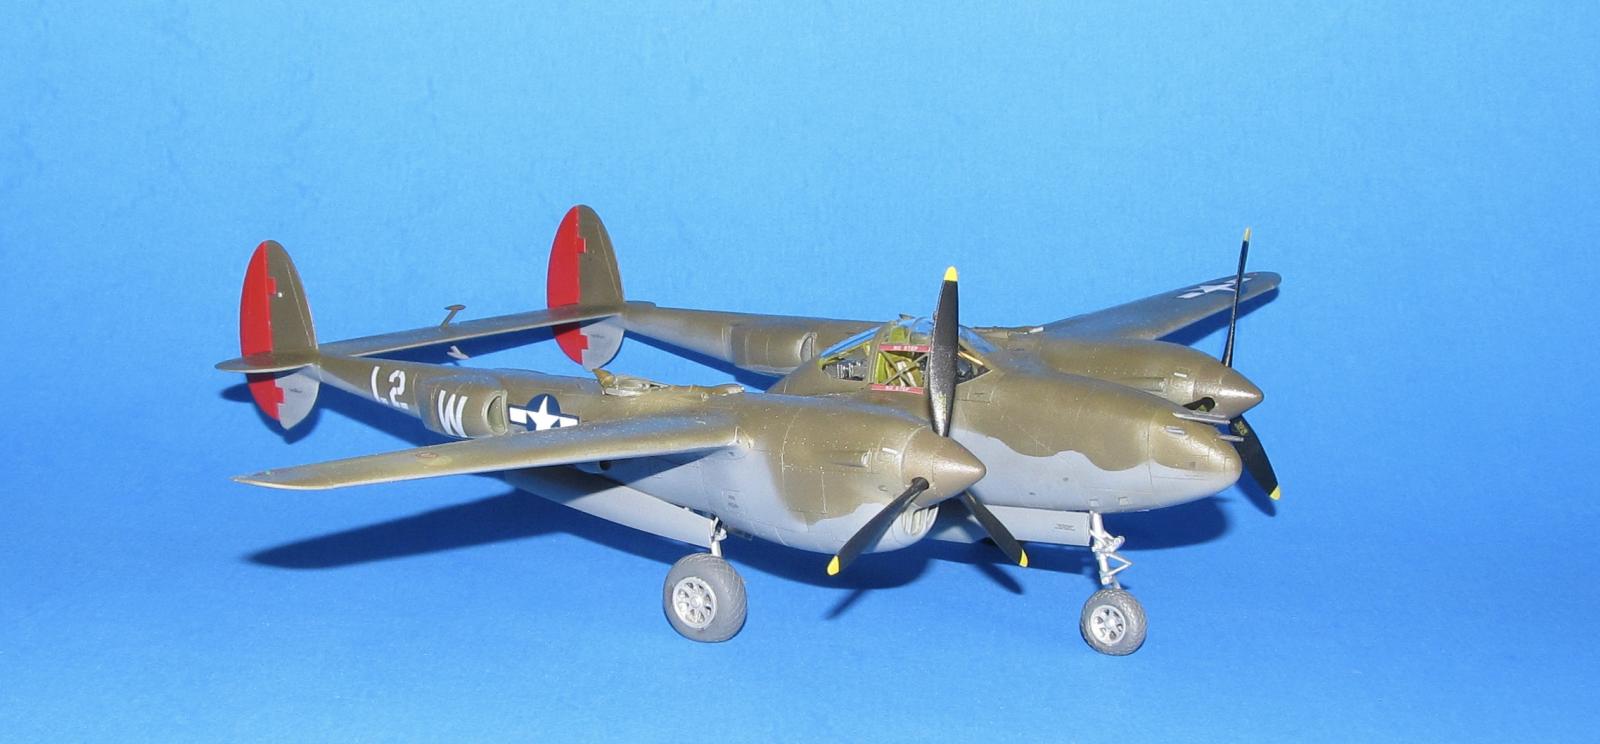 1/48 Tamiya P-38J (Robin Old's Scat II) - Lightning Robin Olds - iModeler